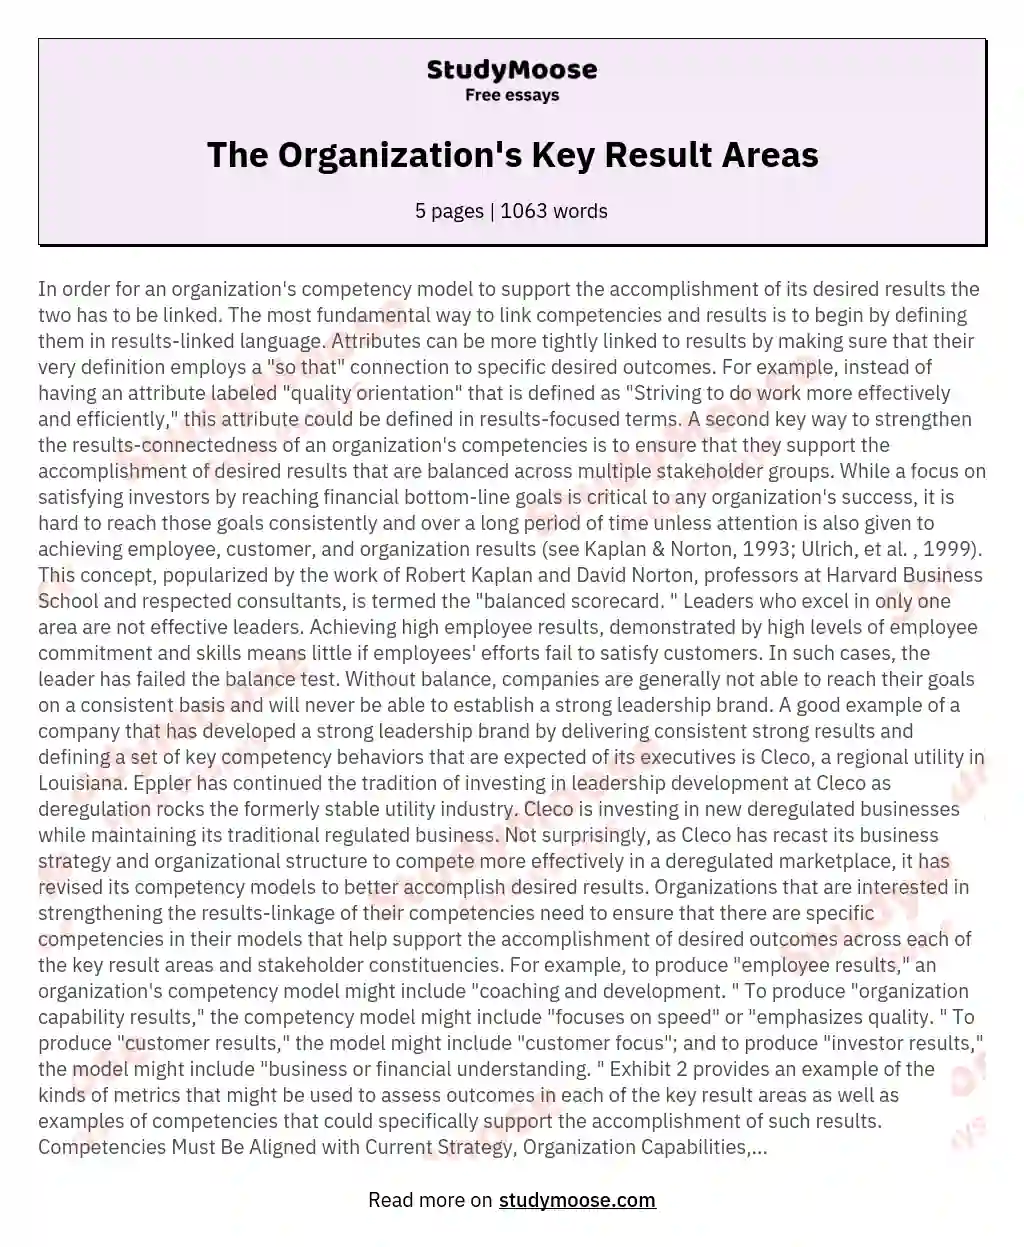 The Organization's Key Result Areas essay